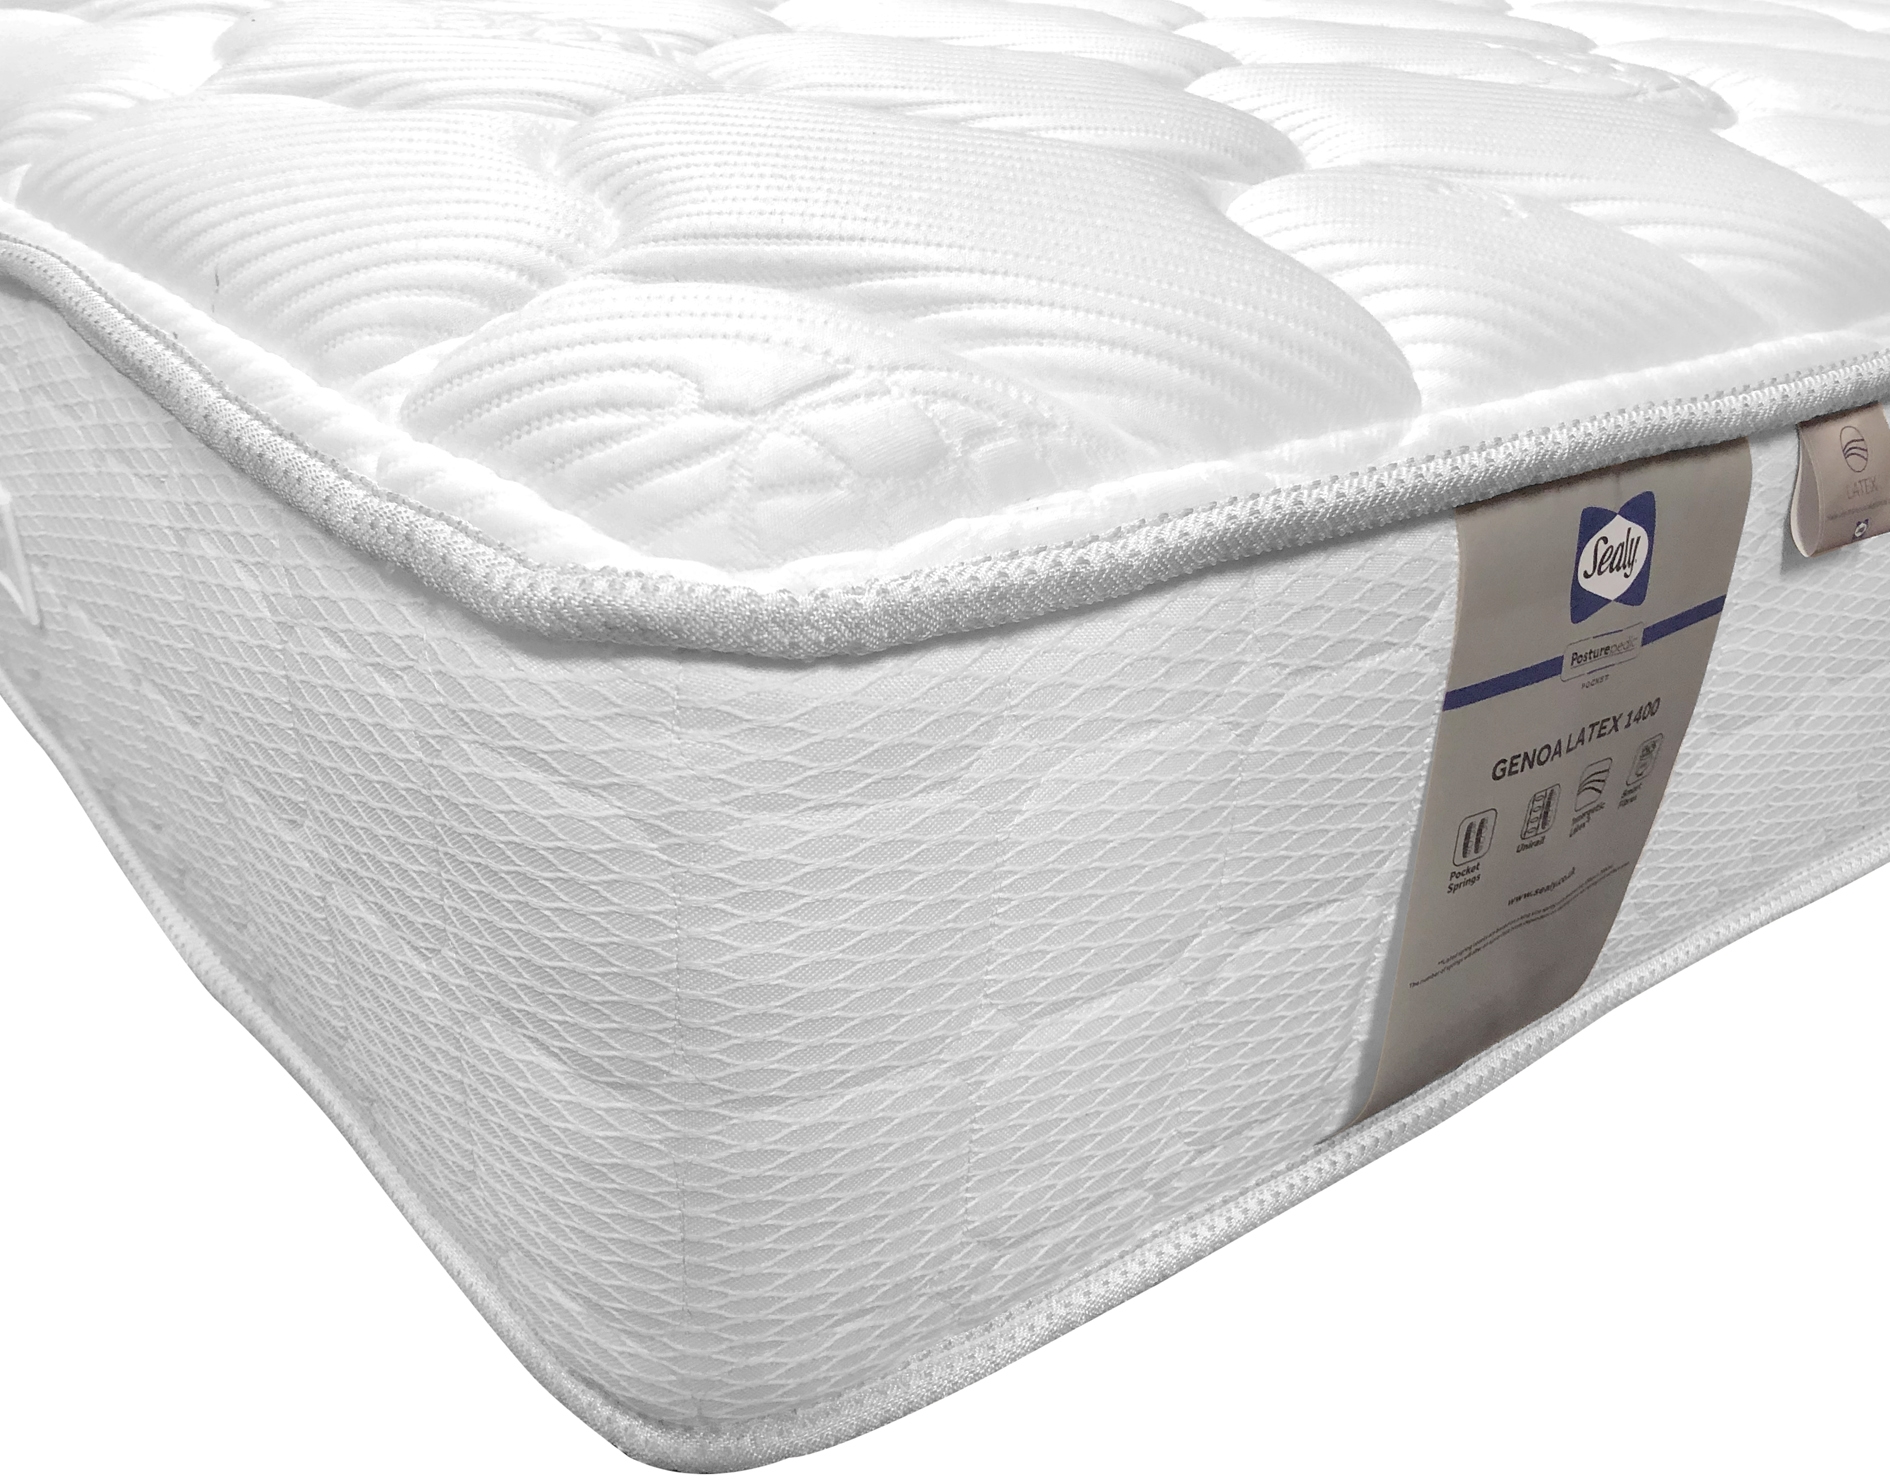 sealy genoa mattress reviews